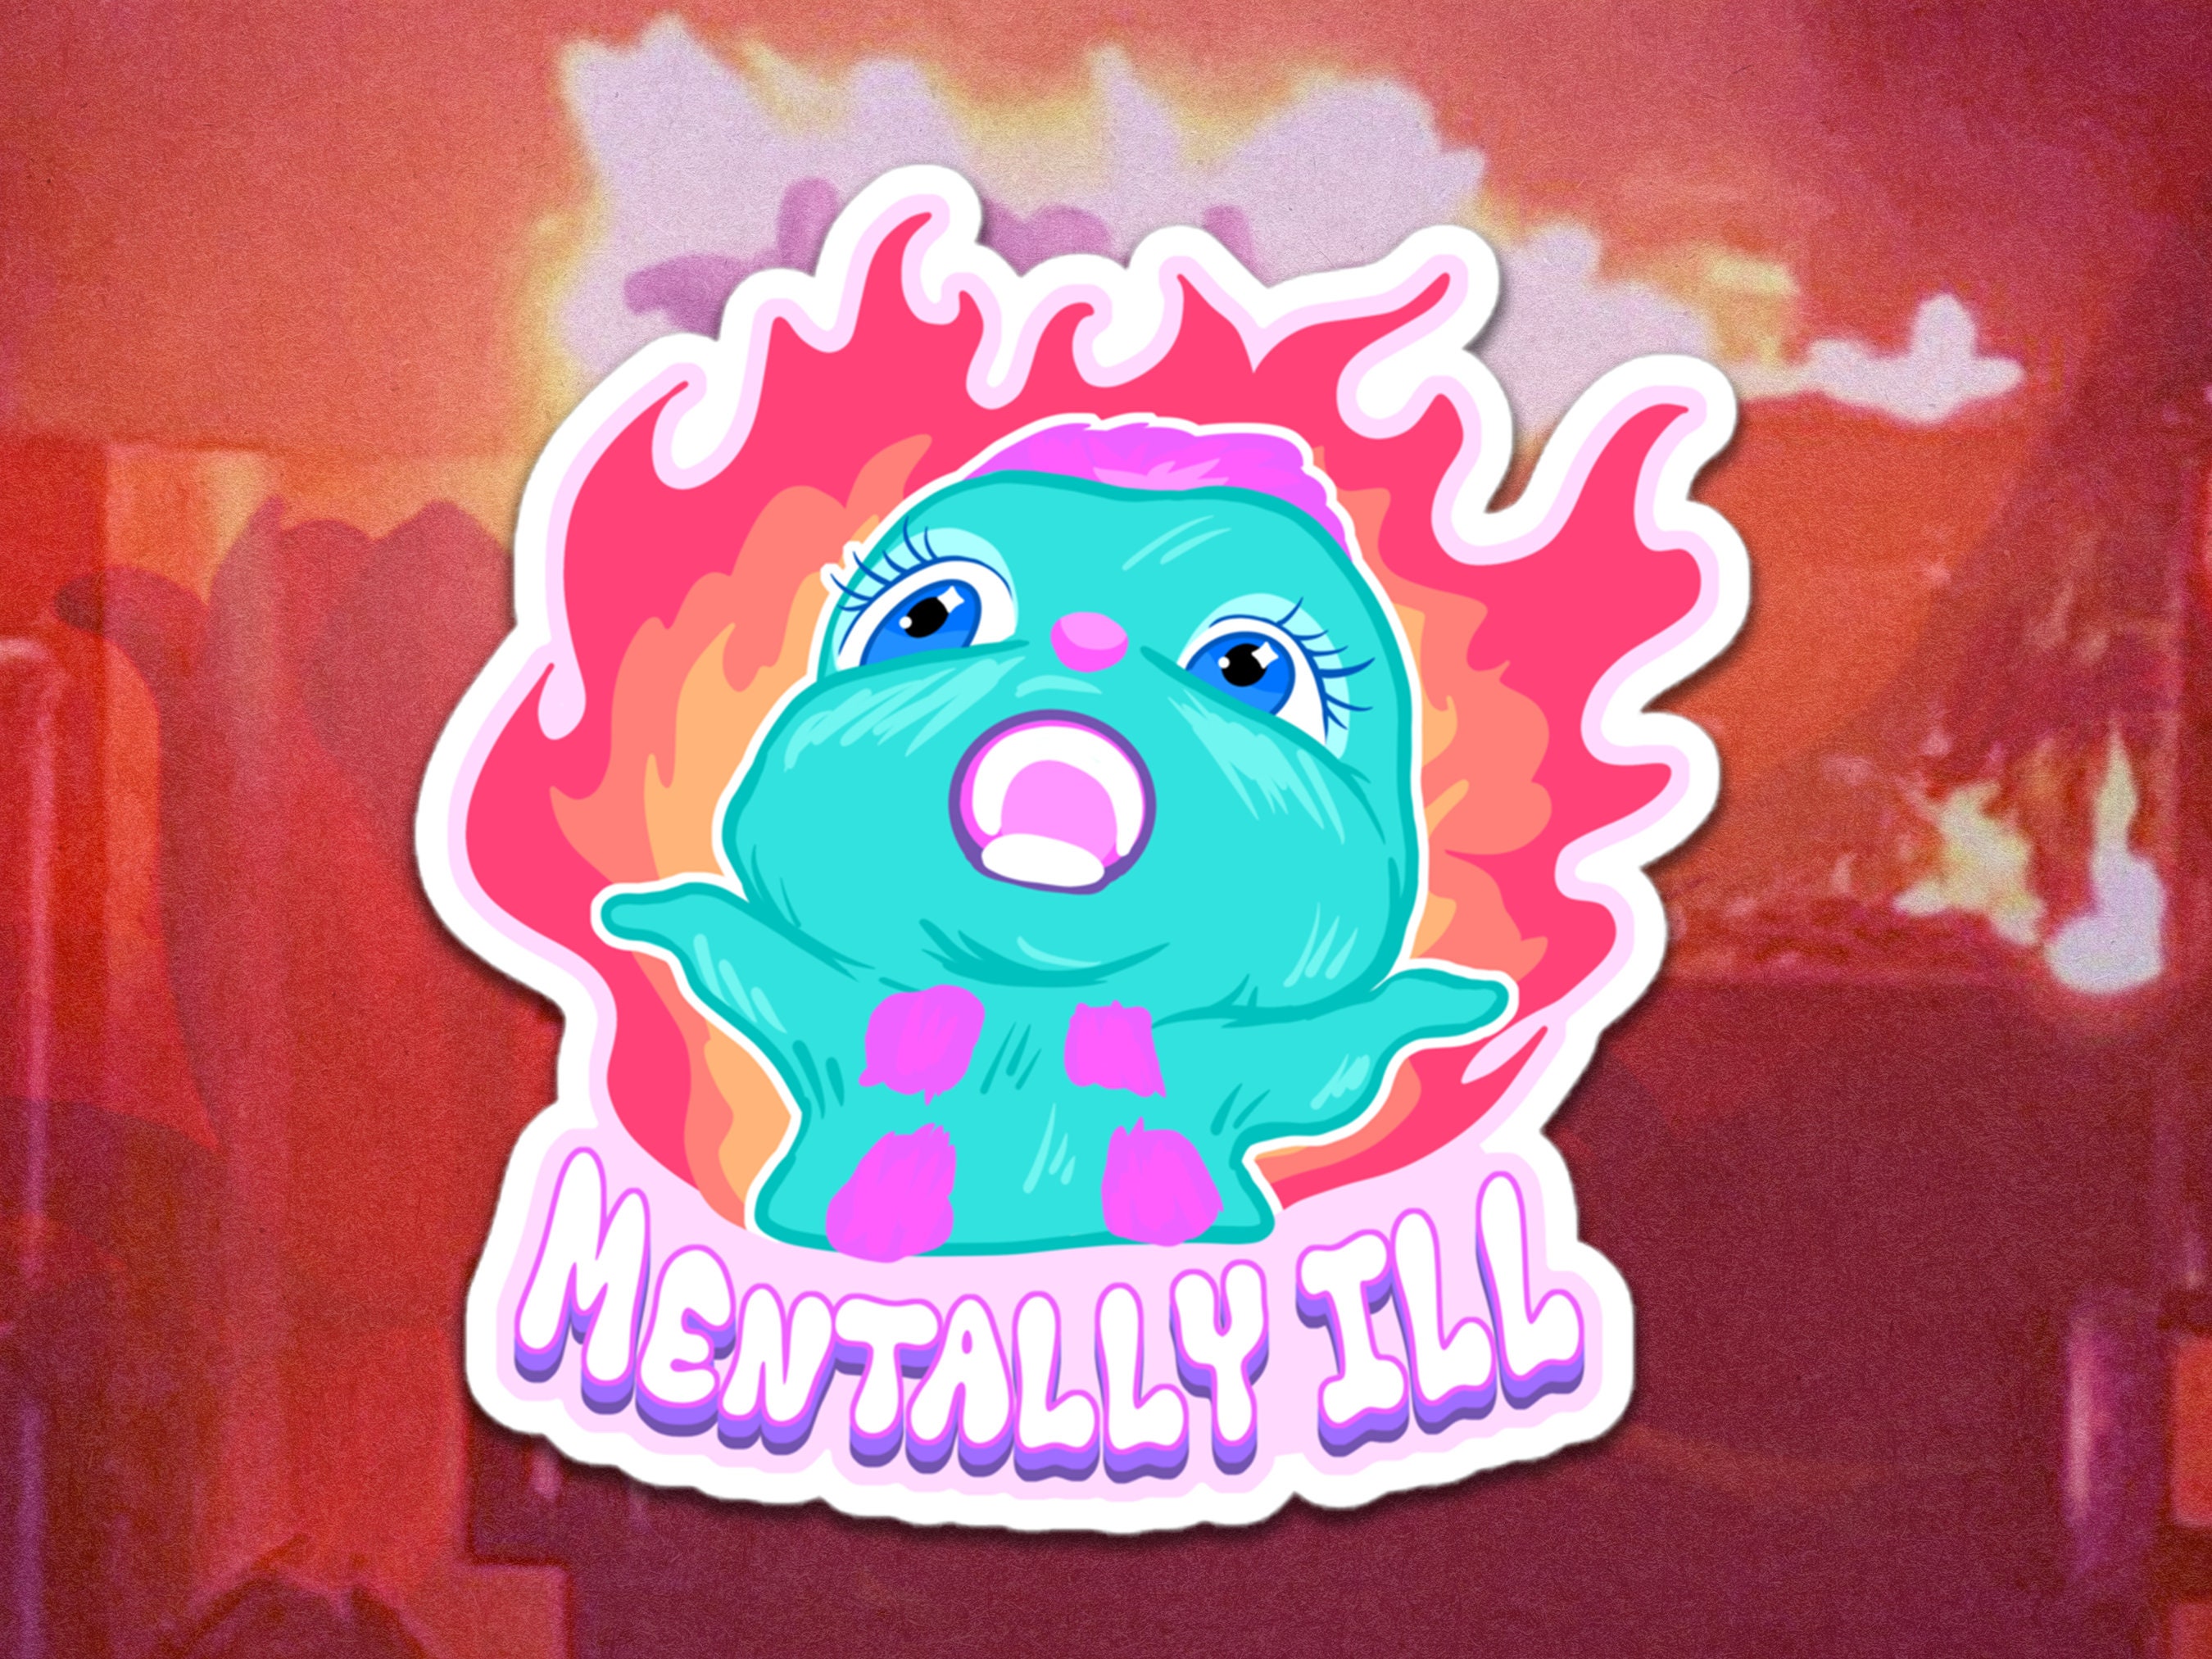 Mentally Ill Bibble Meme Sticker Fairytopia Bibble Flames Meme Bibble Fire  Chaotic Meme Sticker 